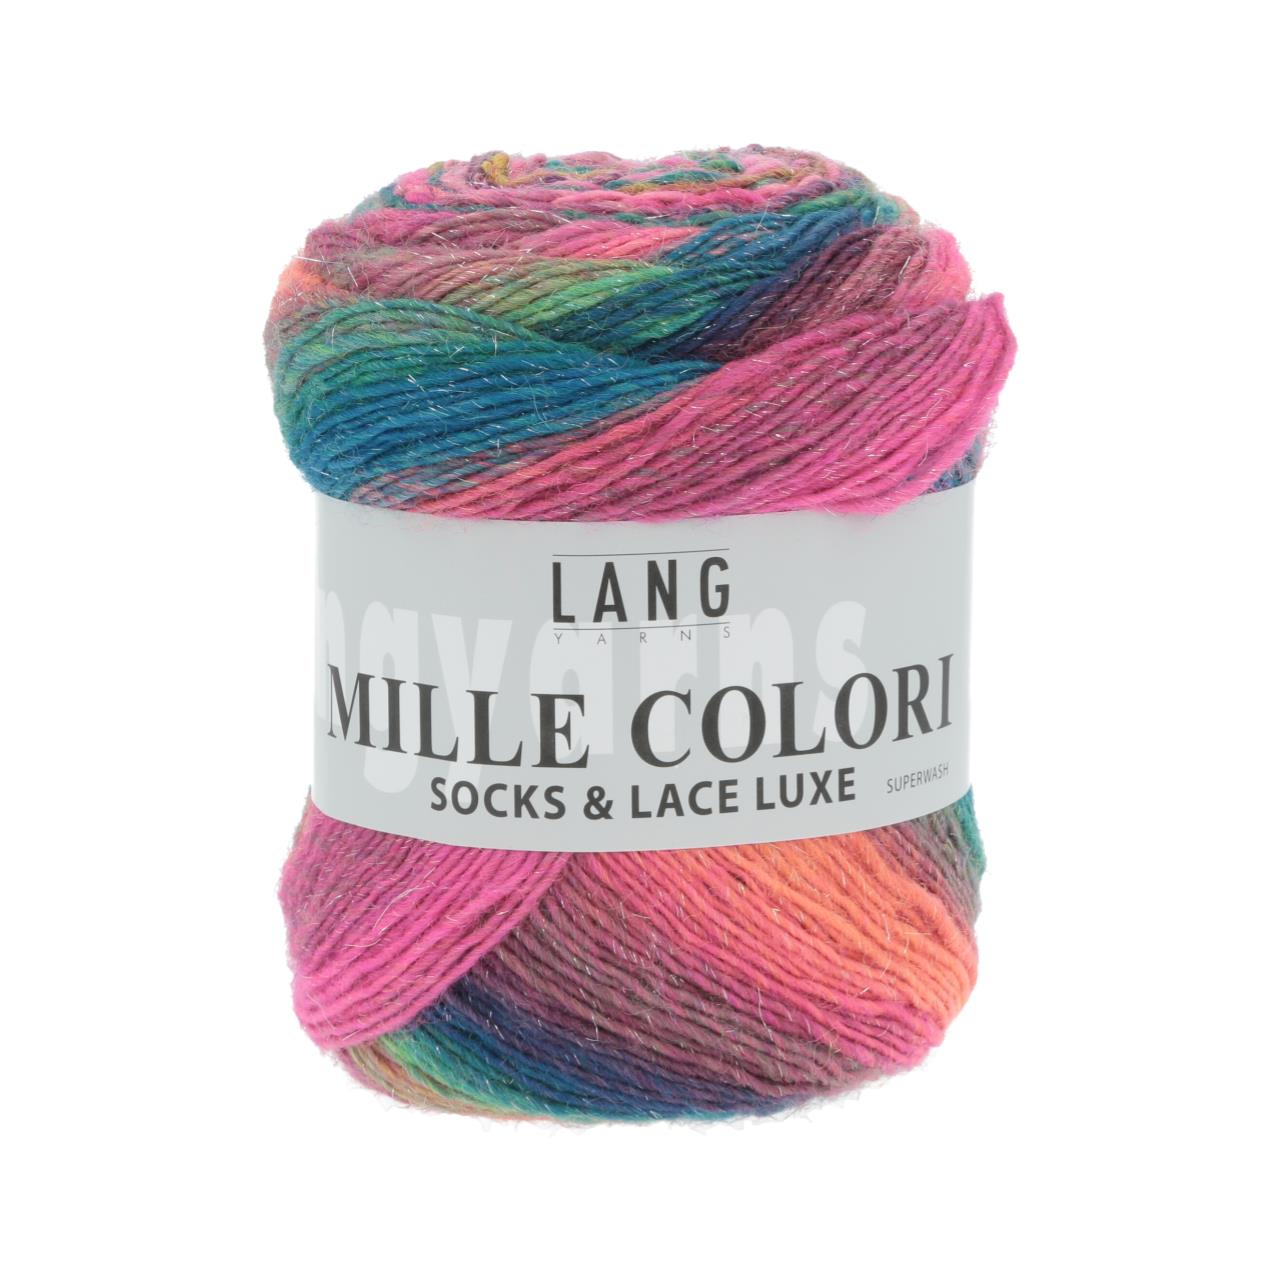 Mille Colori Socks & Lace Luxe 50 Bunt Pink/Blau